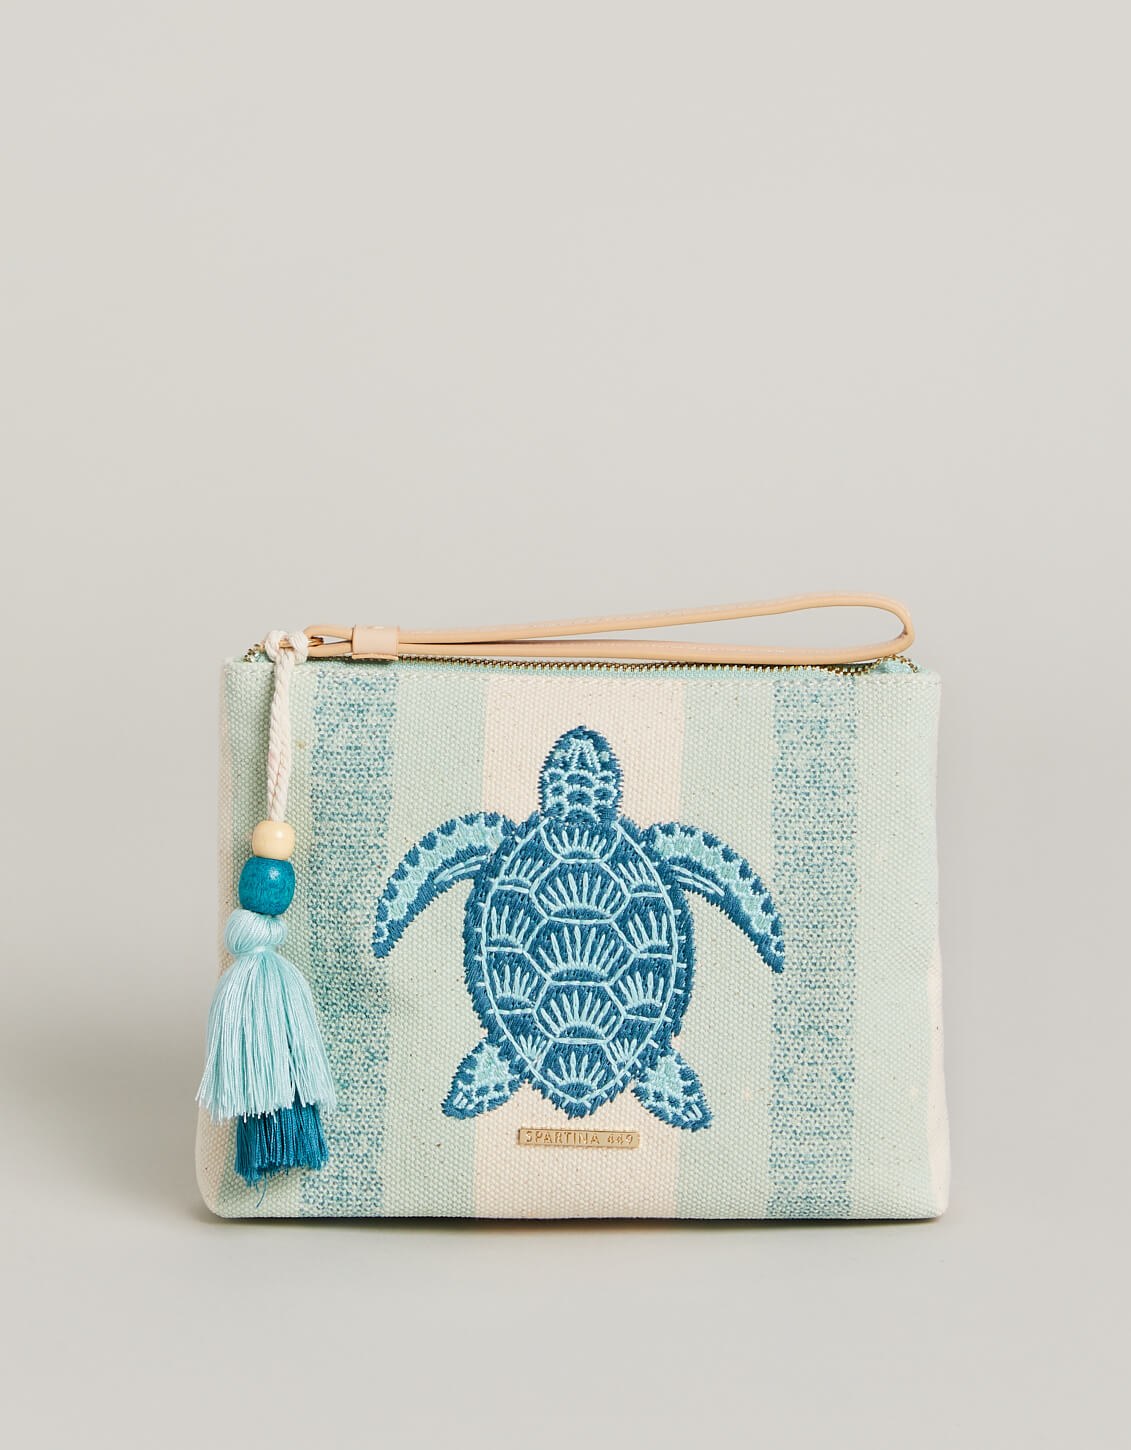 New Natasha Couture Turtle Crystal Embellished Luxury Clutch Handbag, Purse~RARE  | eBay